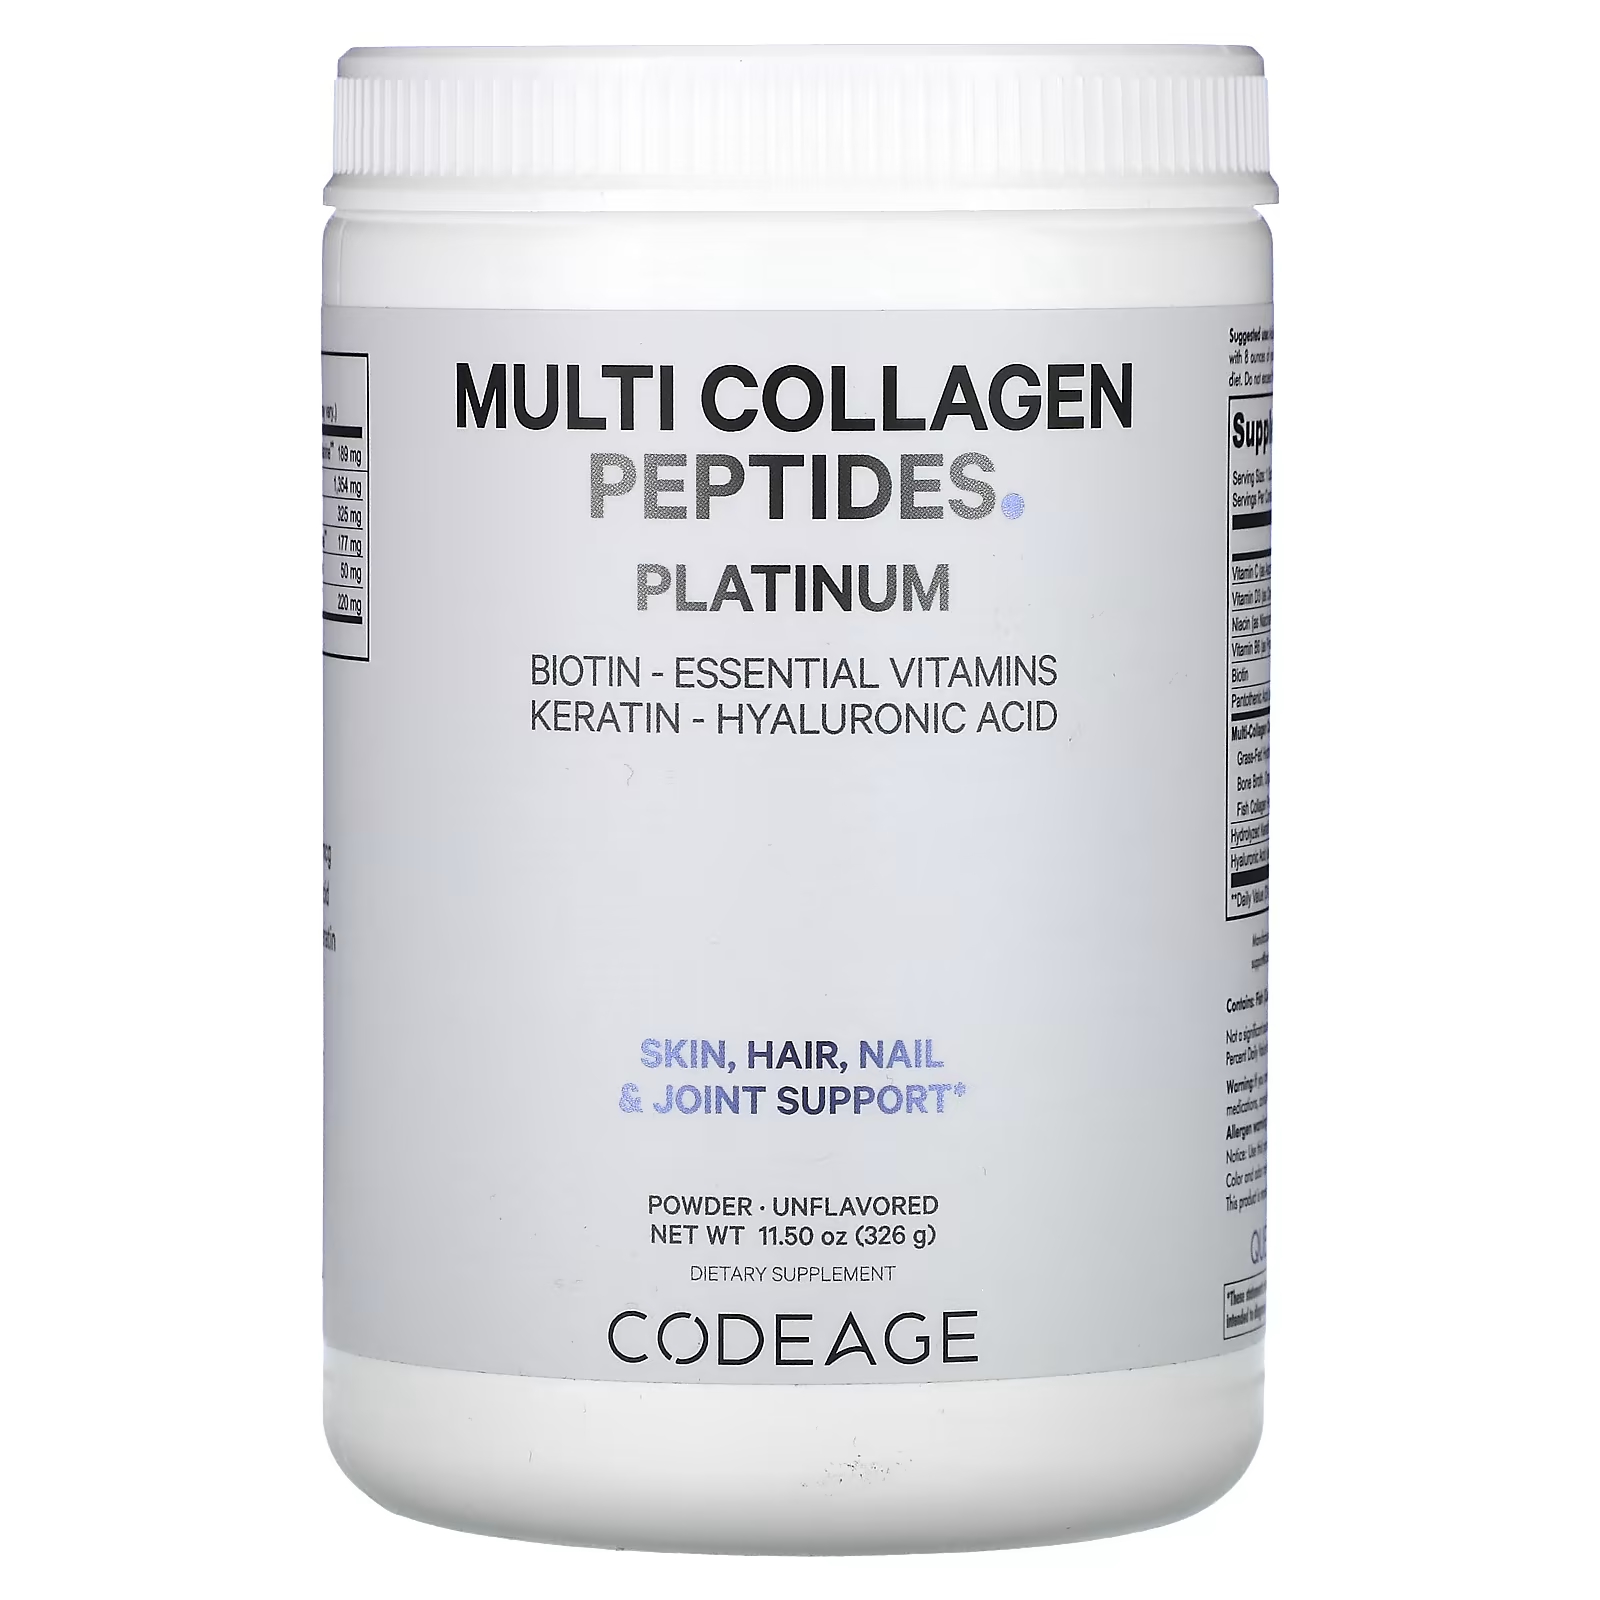 Codeage Multi Collagen Peptides Powder Platinum, без вкуса, 326 г пищевая добавка codeage platinum пептиды морского коллагена без вкуса 326г